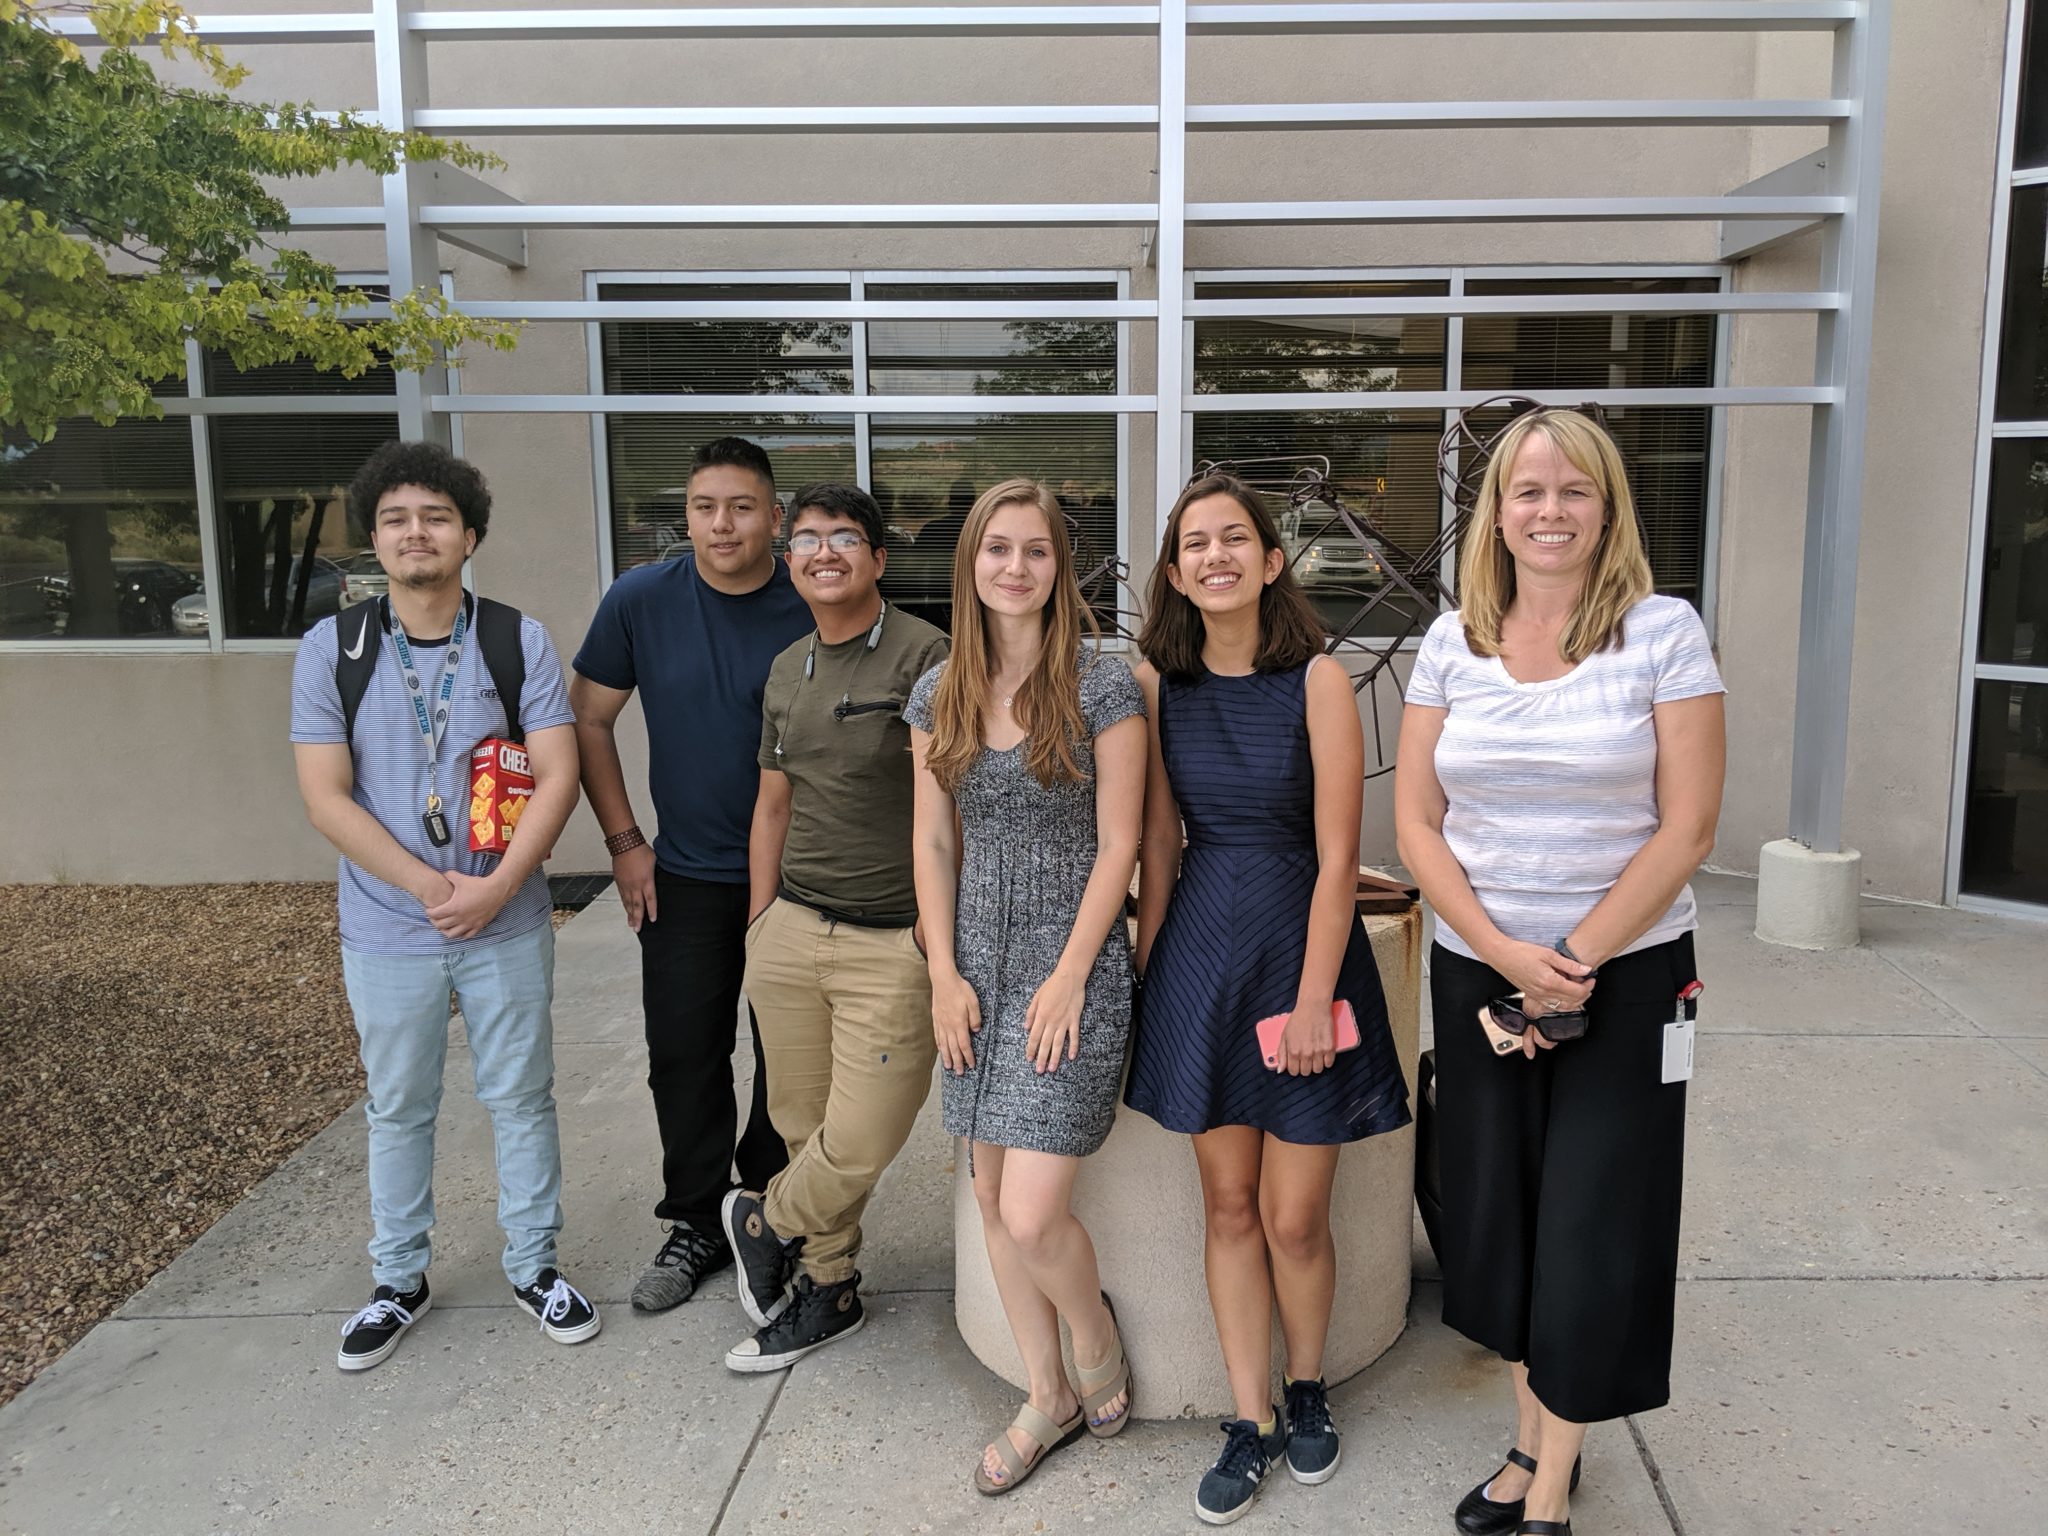 2019 Santa Fe interns with Program Manager, Rhonda Crespo